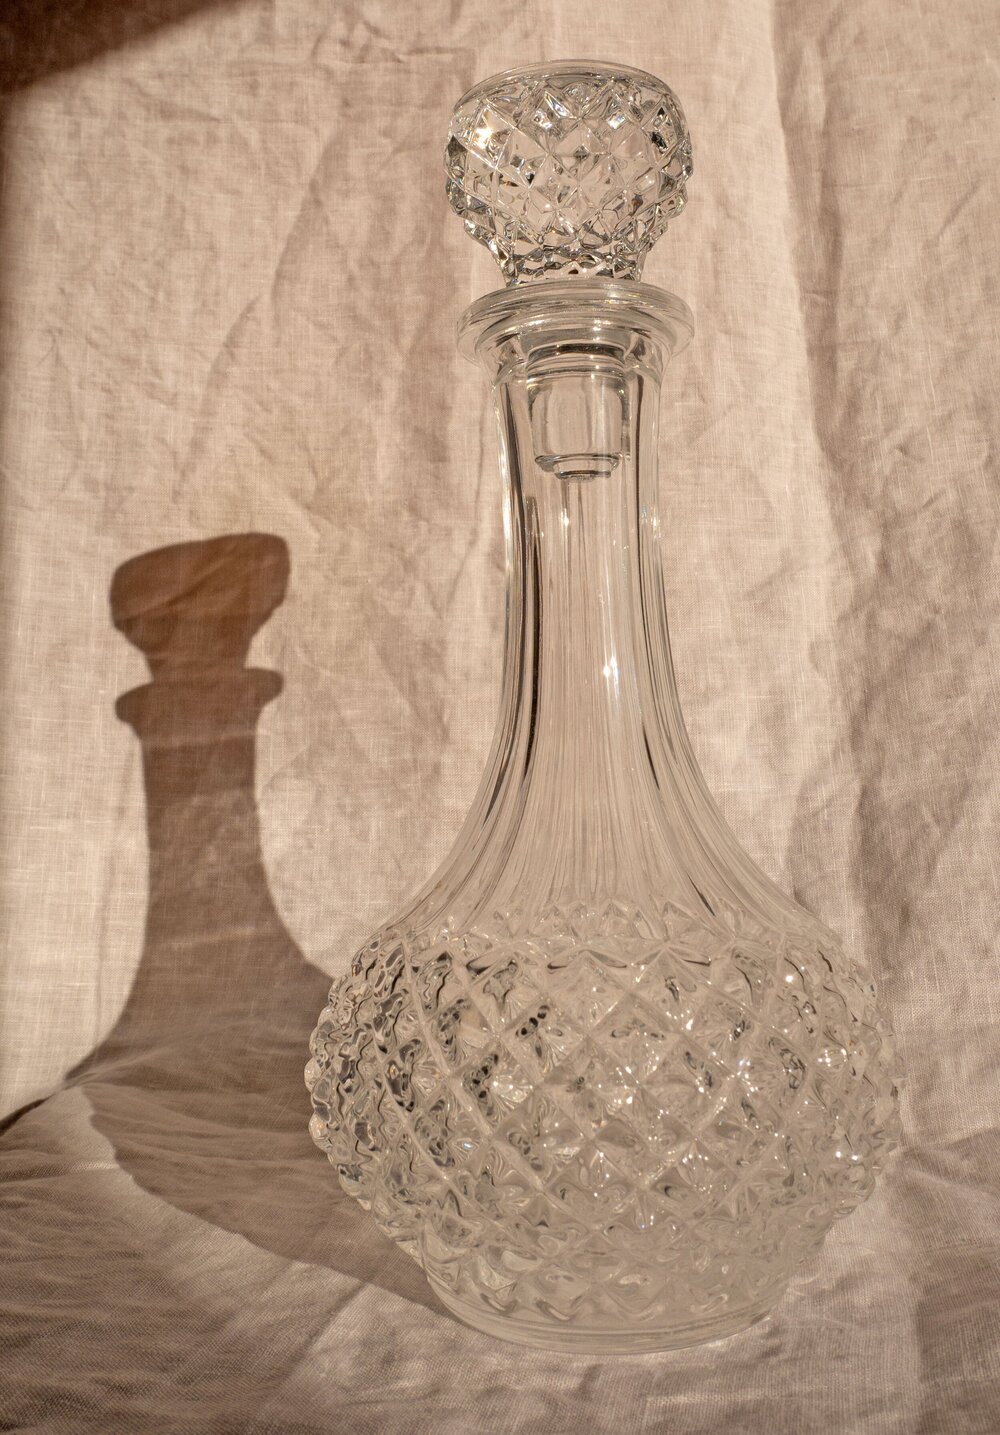 2 Vintage wine liquor bottles Decanter with lid Cleardiamond cut glass